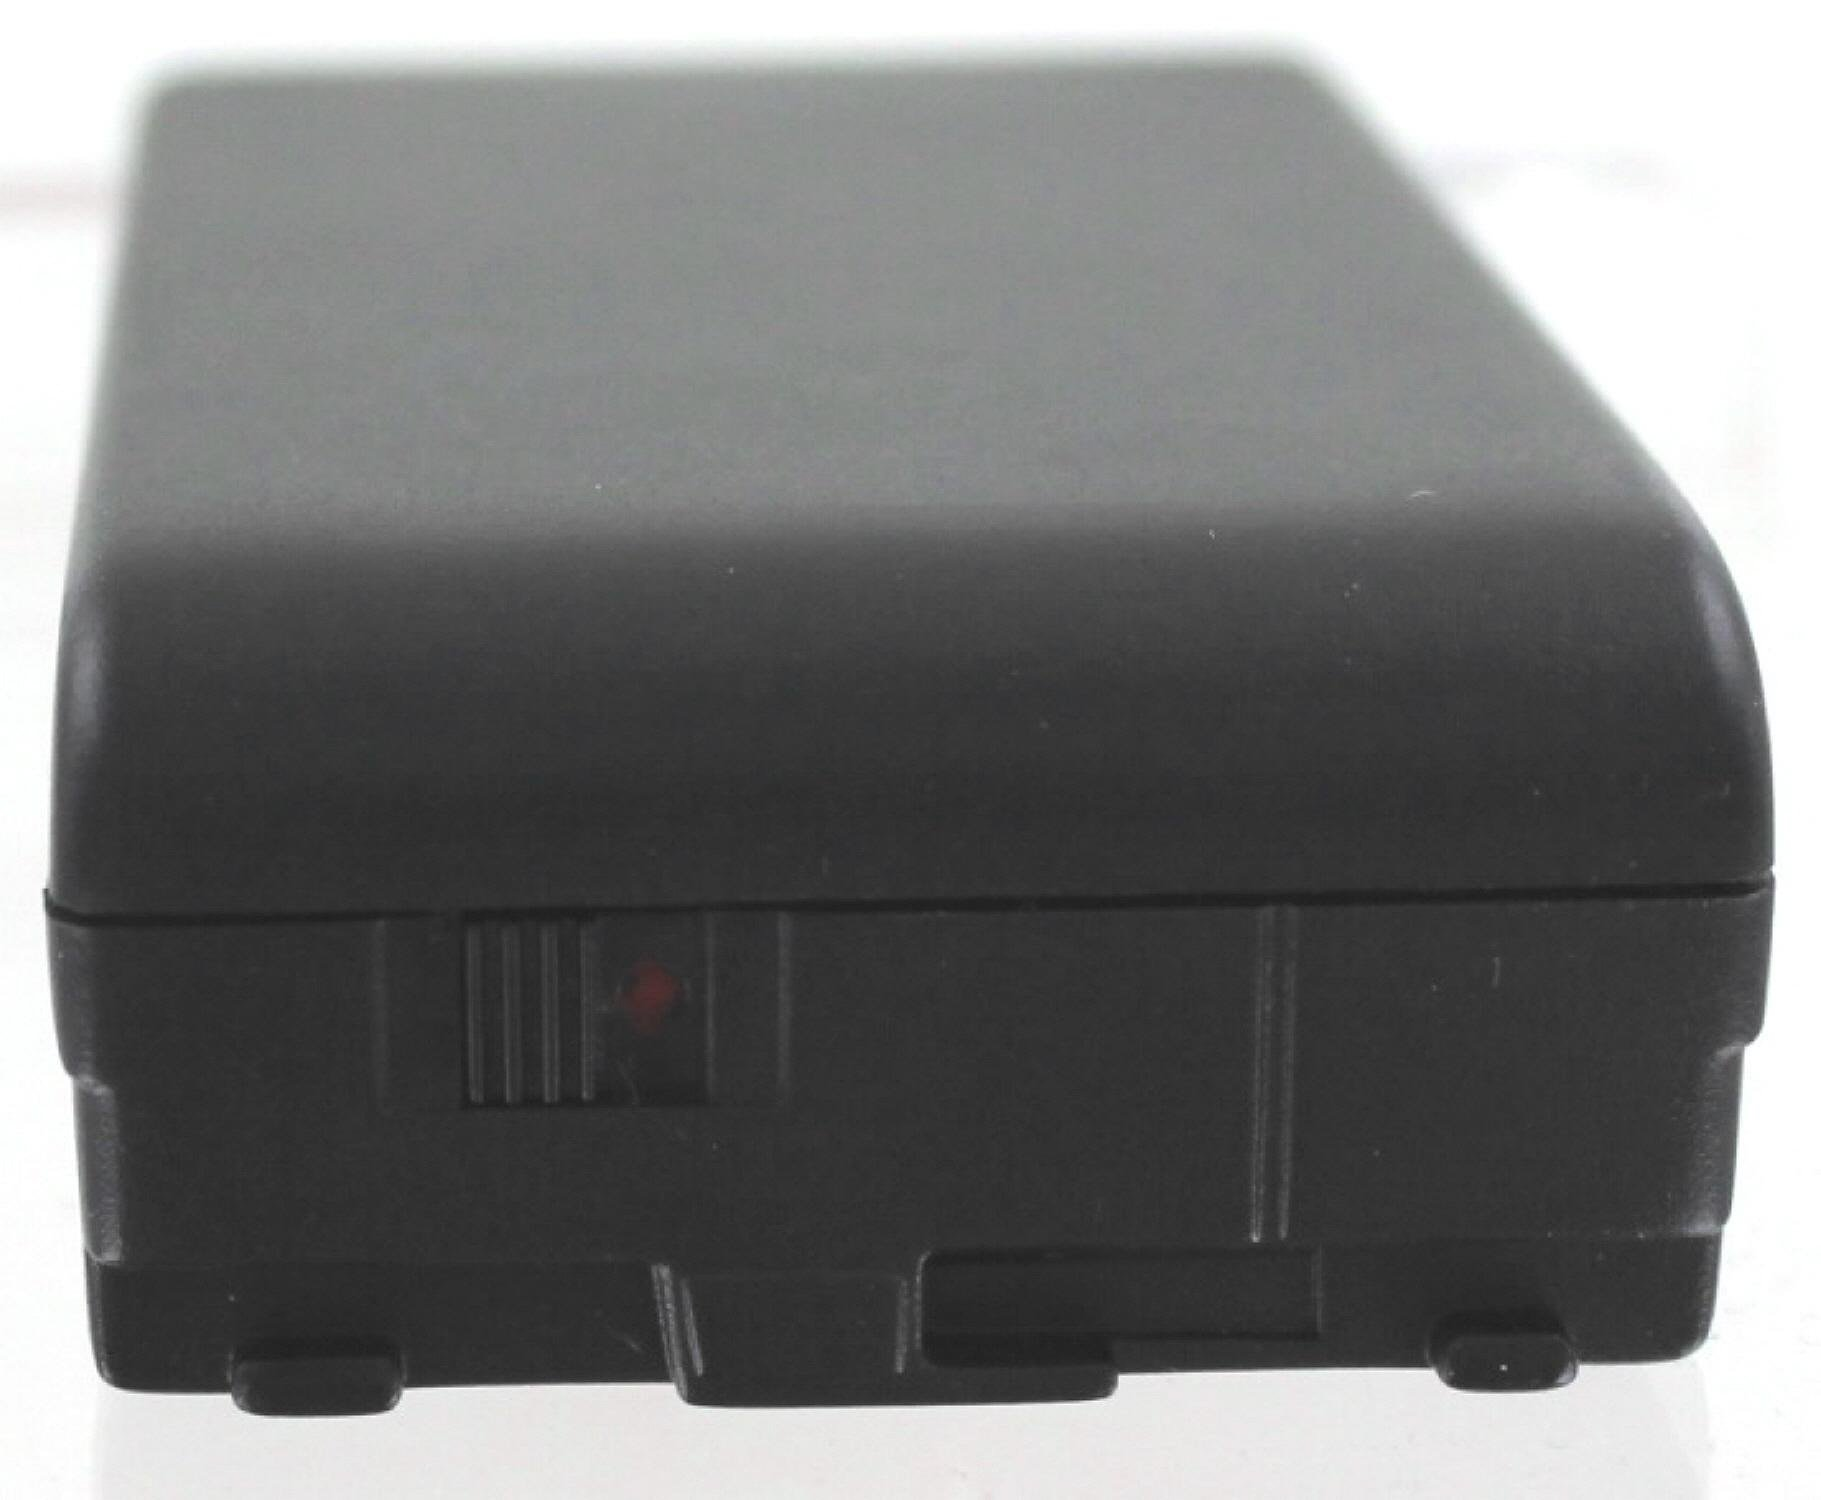 Camcorderakku, 2000 6 Volt, mit NiMH, Sony mAh NP-33 AGI NiMH kompatibel Akku